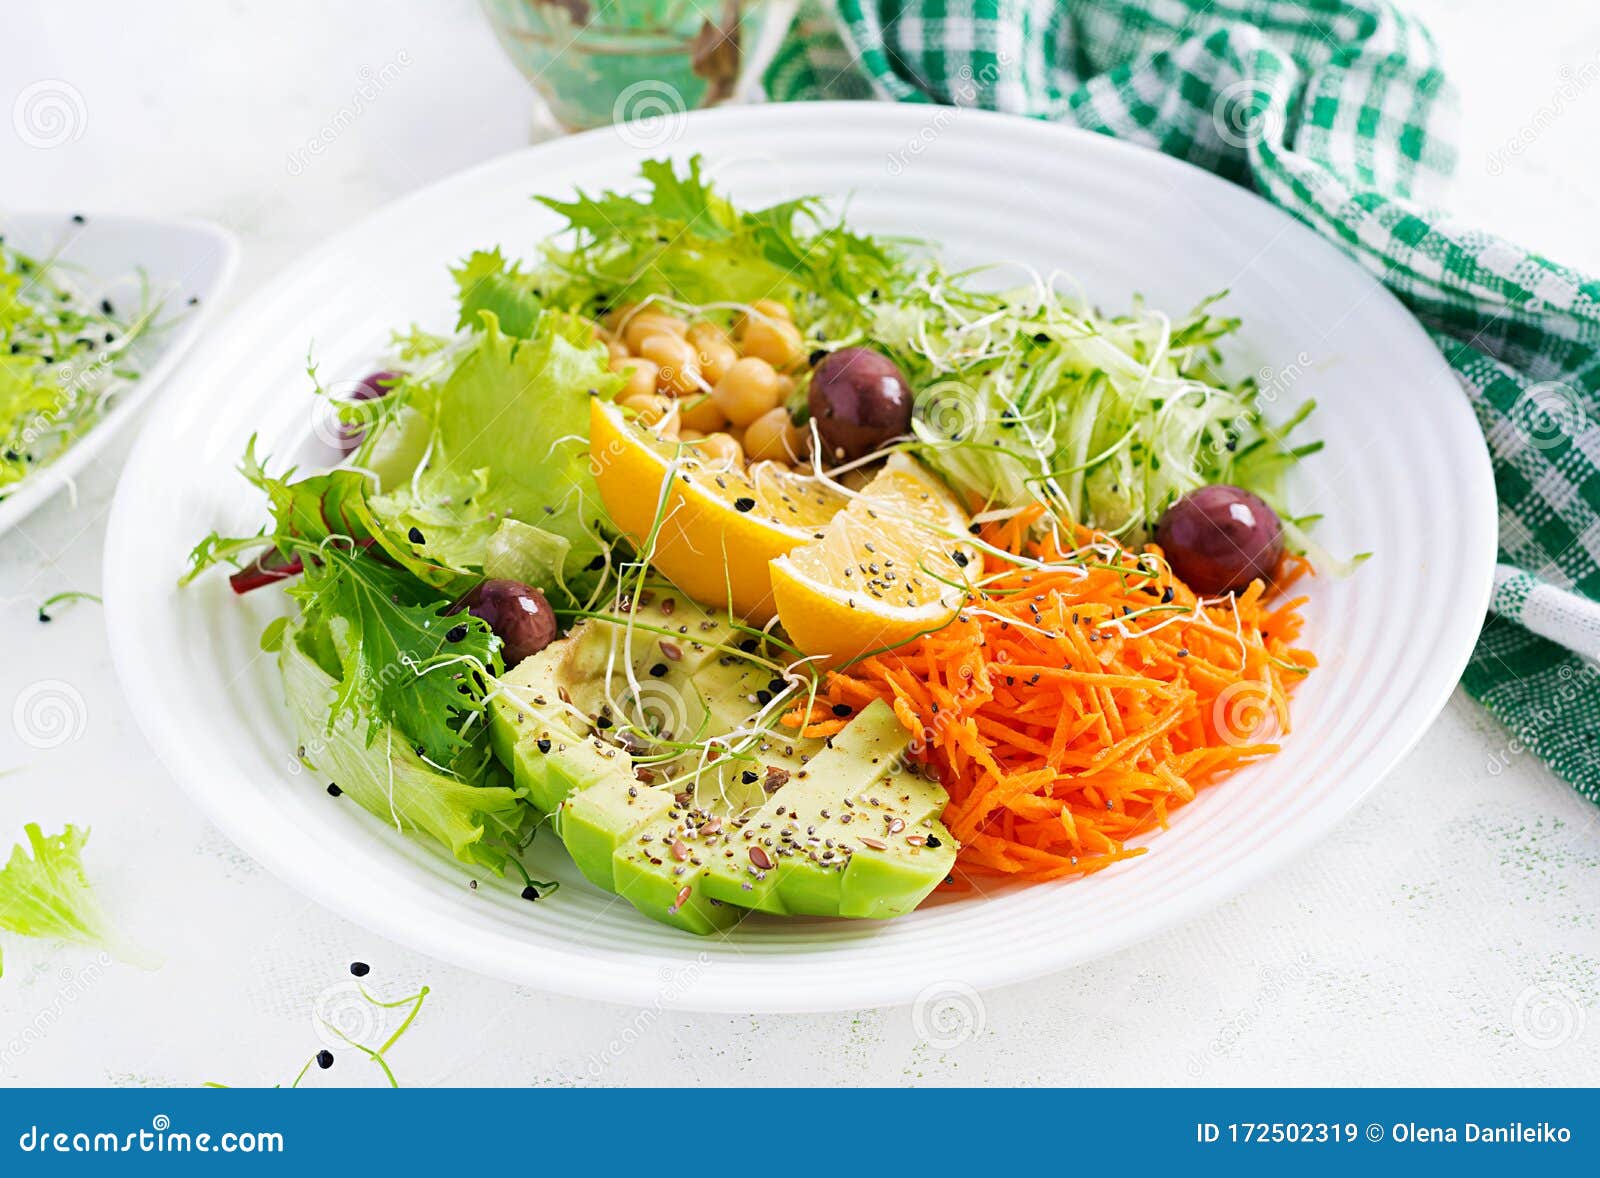 Vegetarian Salad Buddha Bowl Dish with Chickpea, Avocado, Cucumber ...